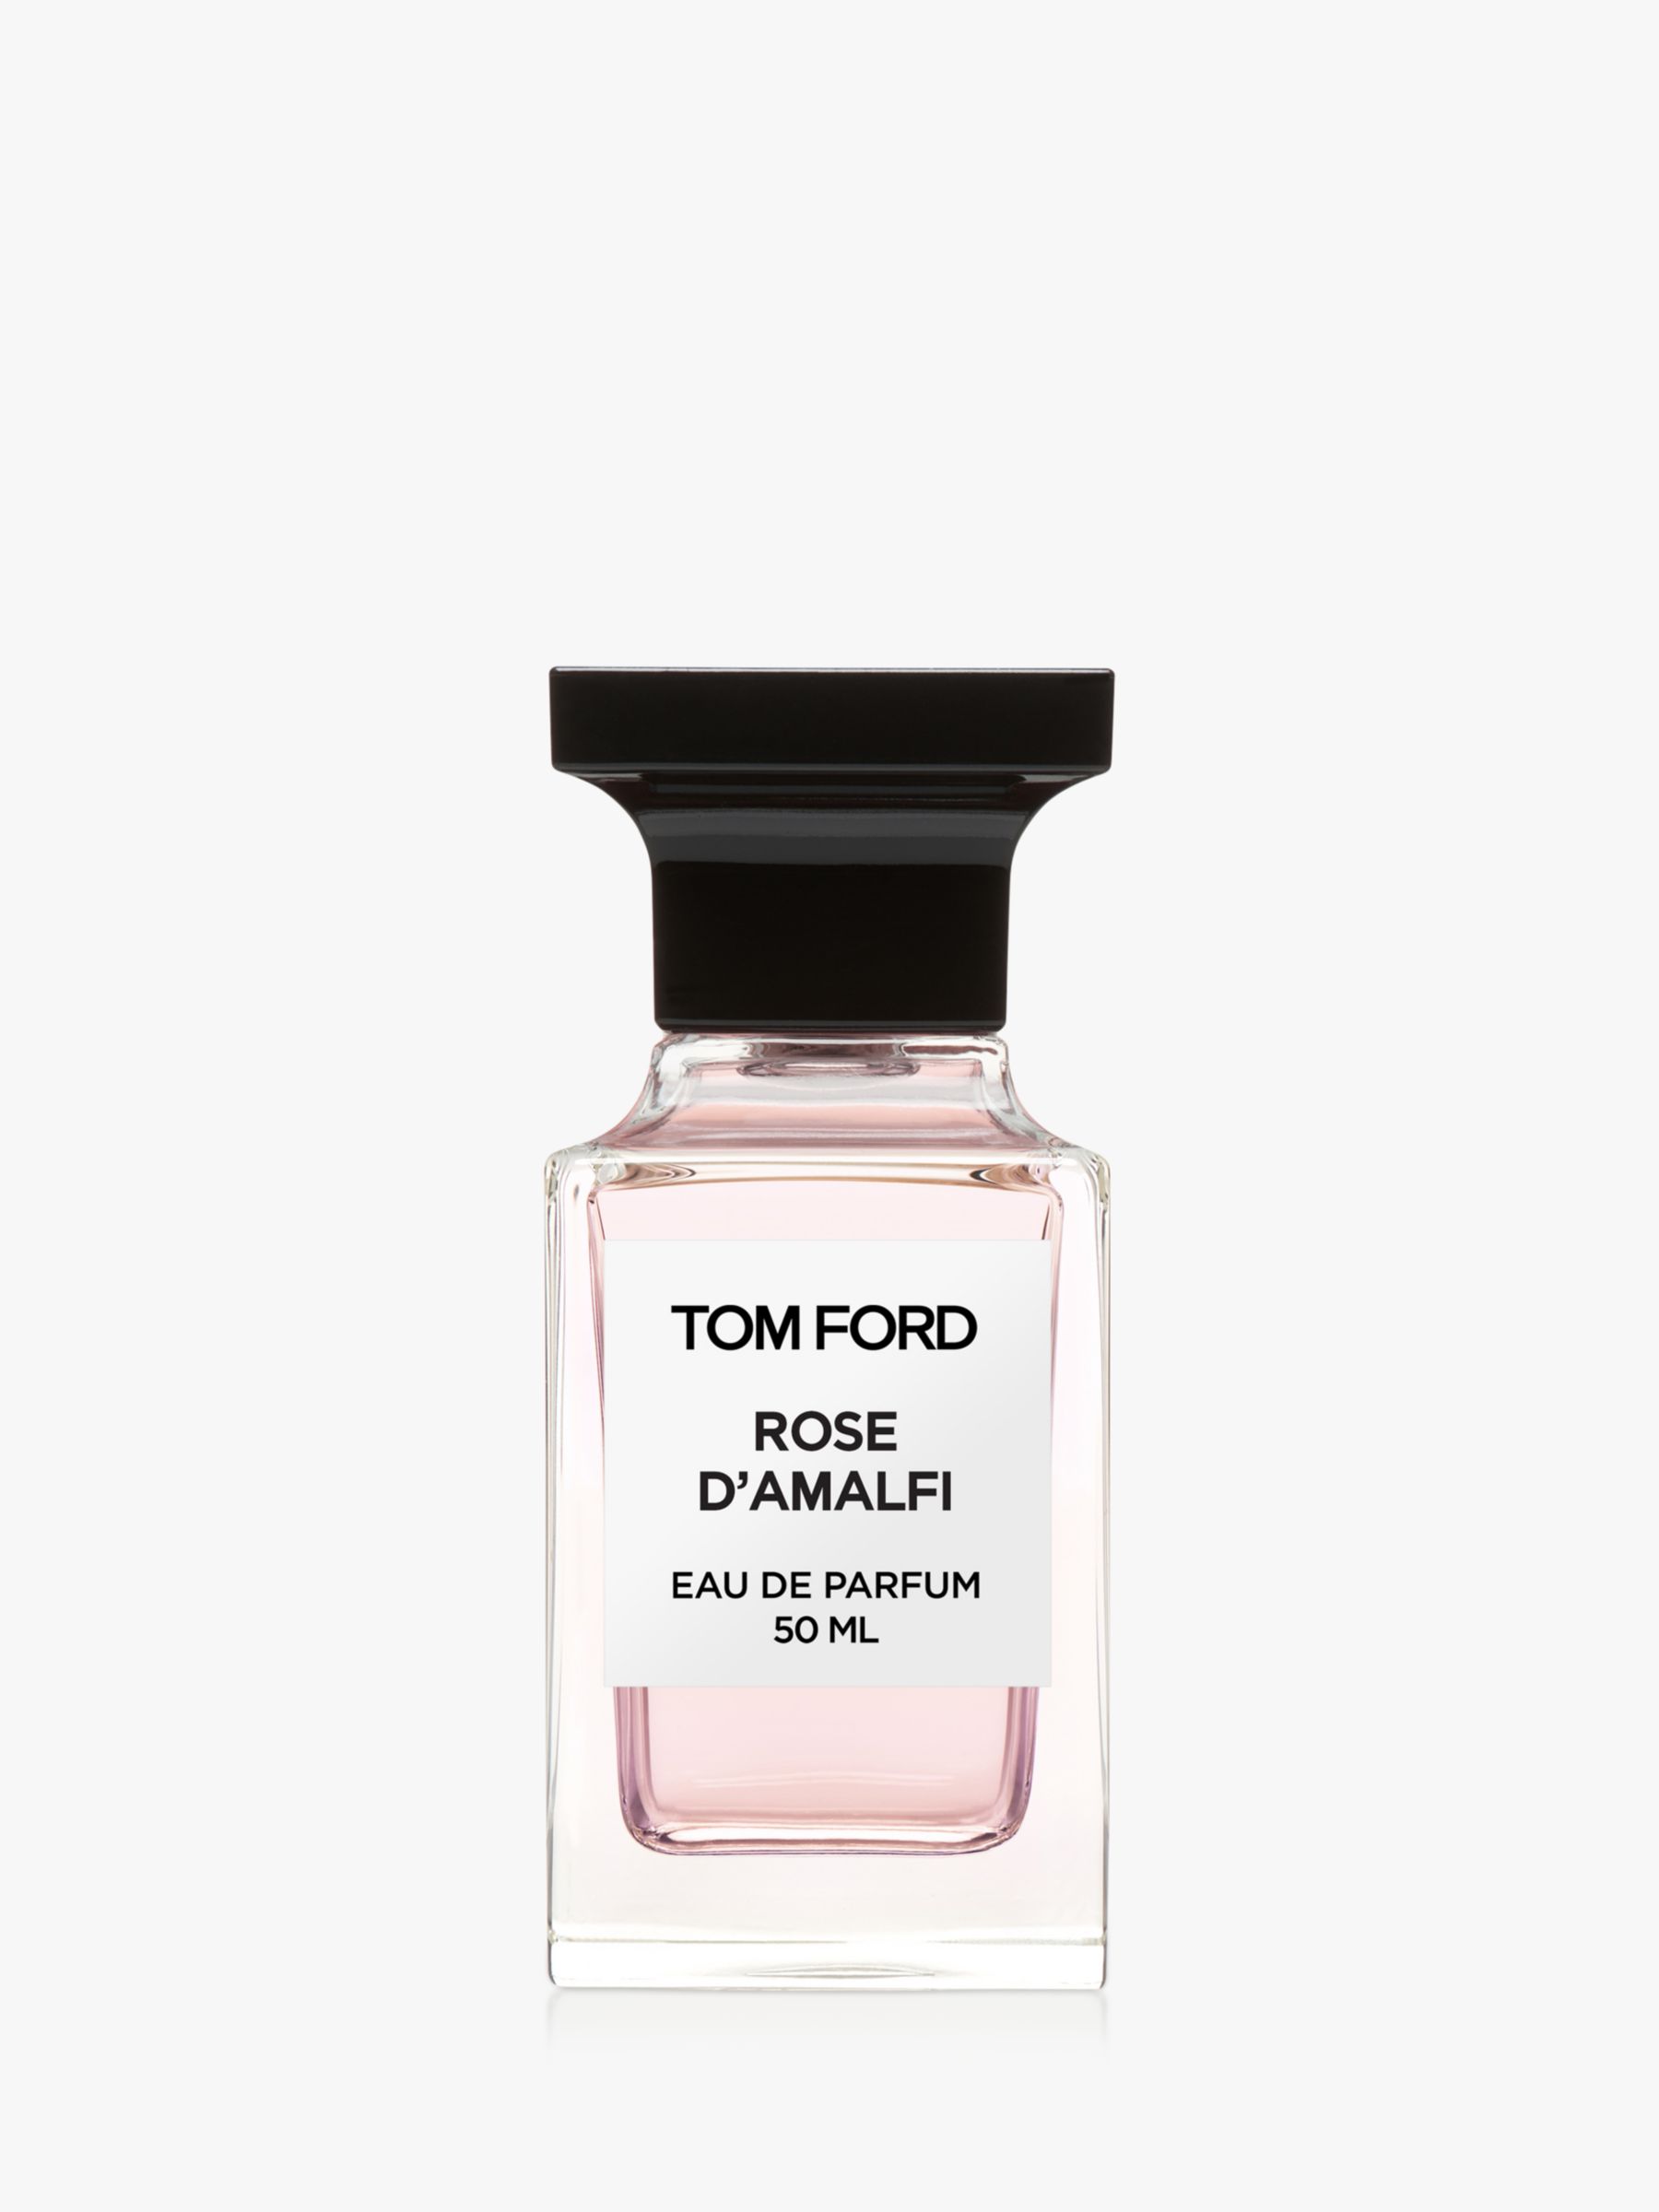 TOM FORD Private Rose Garden Rose D'Amalfi Eau de Parfum, 50ml at John  Lewis & Partners